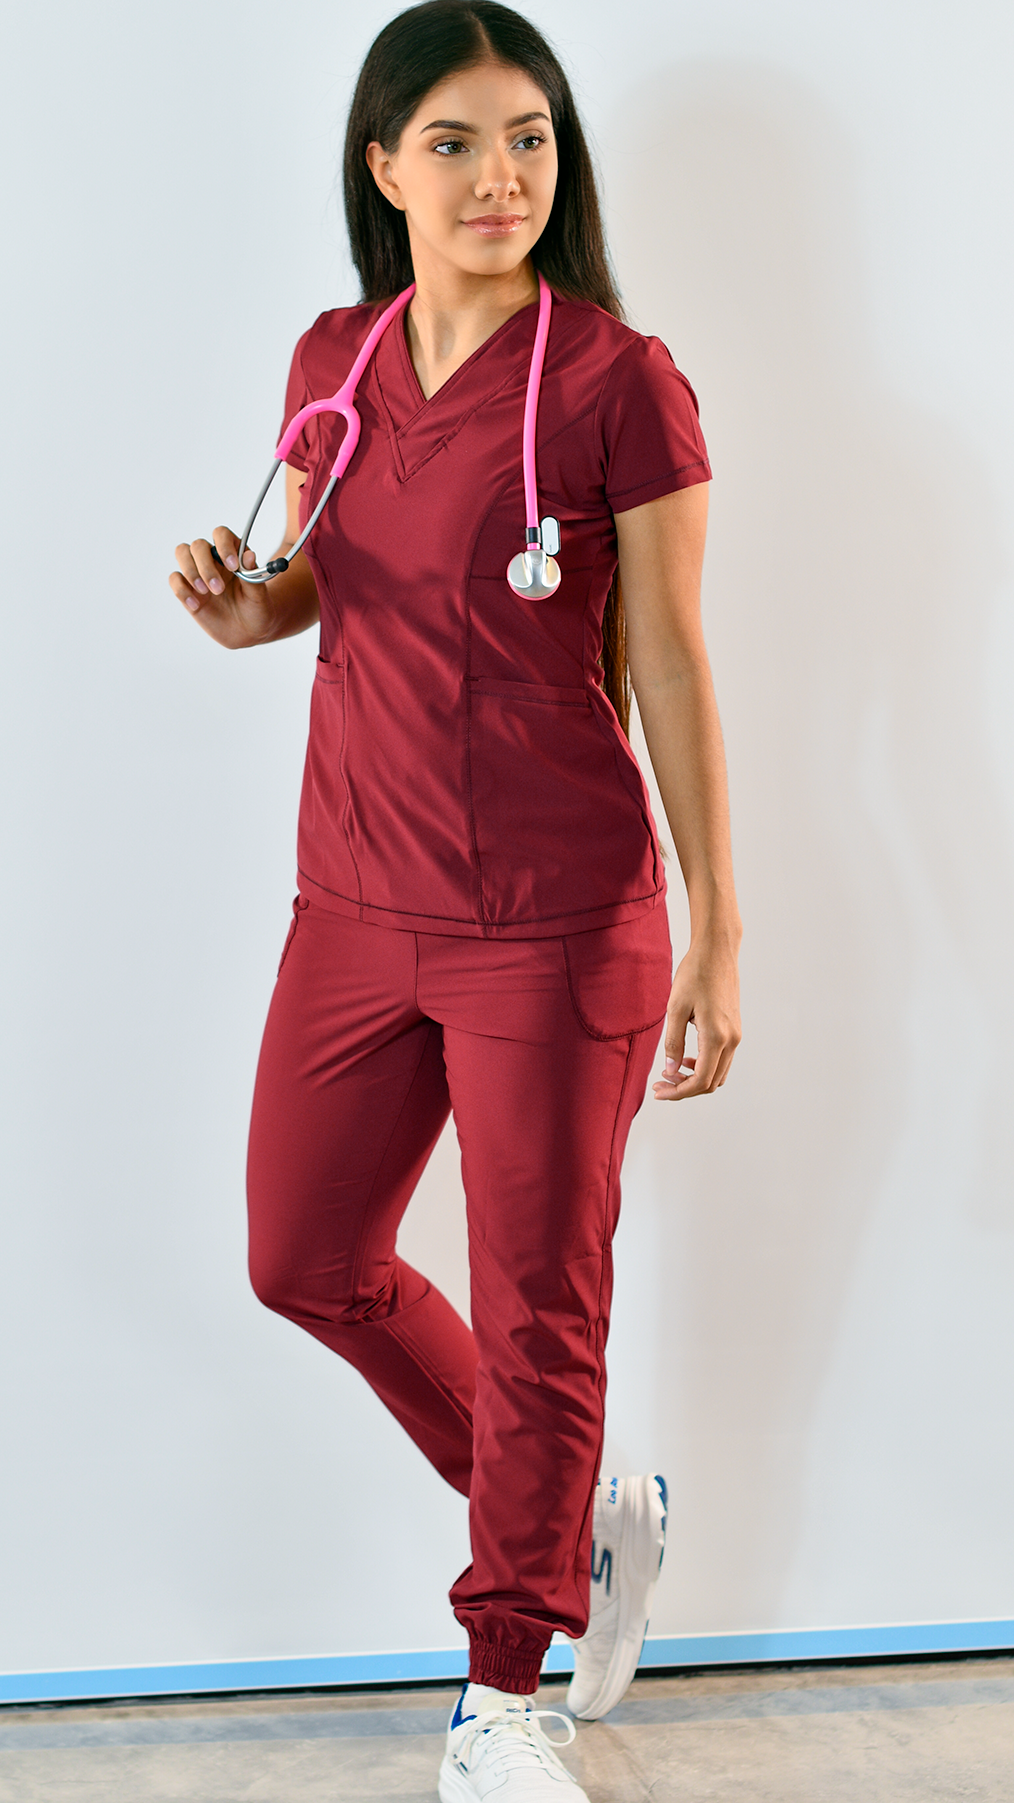 uniforme medico mujer